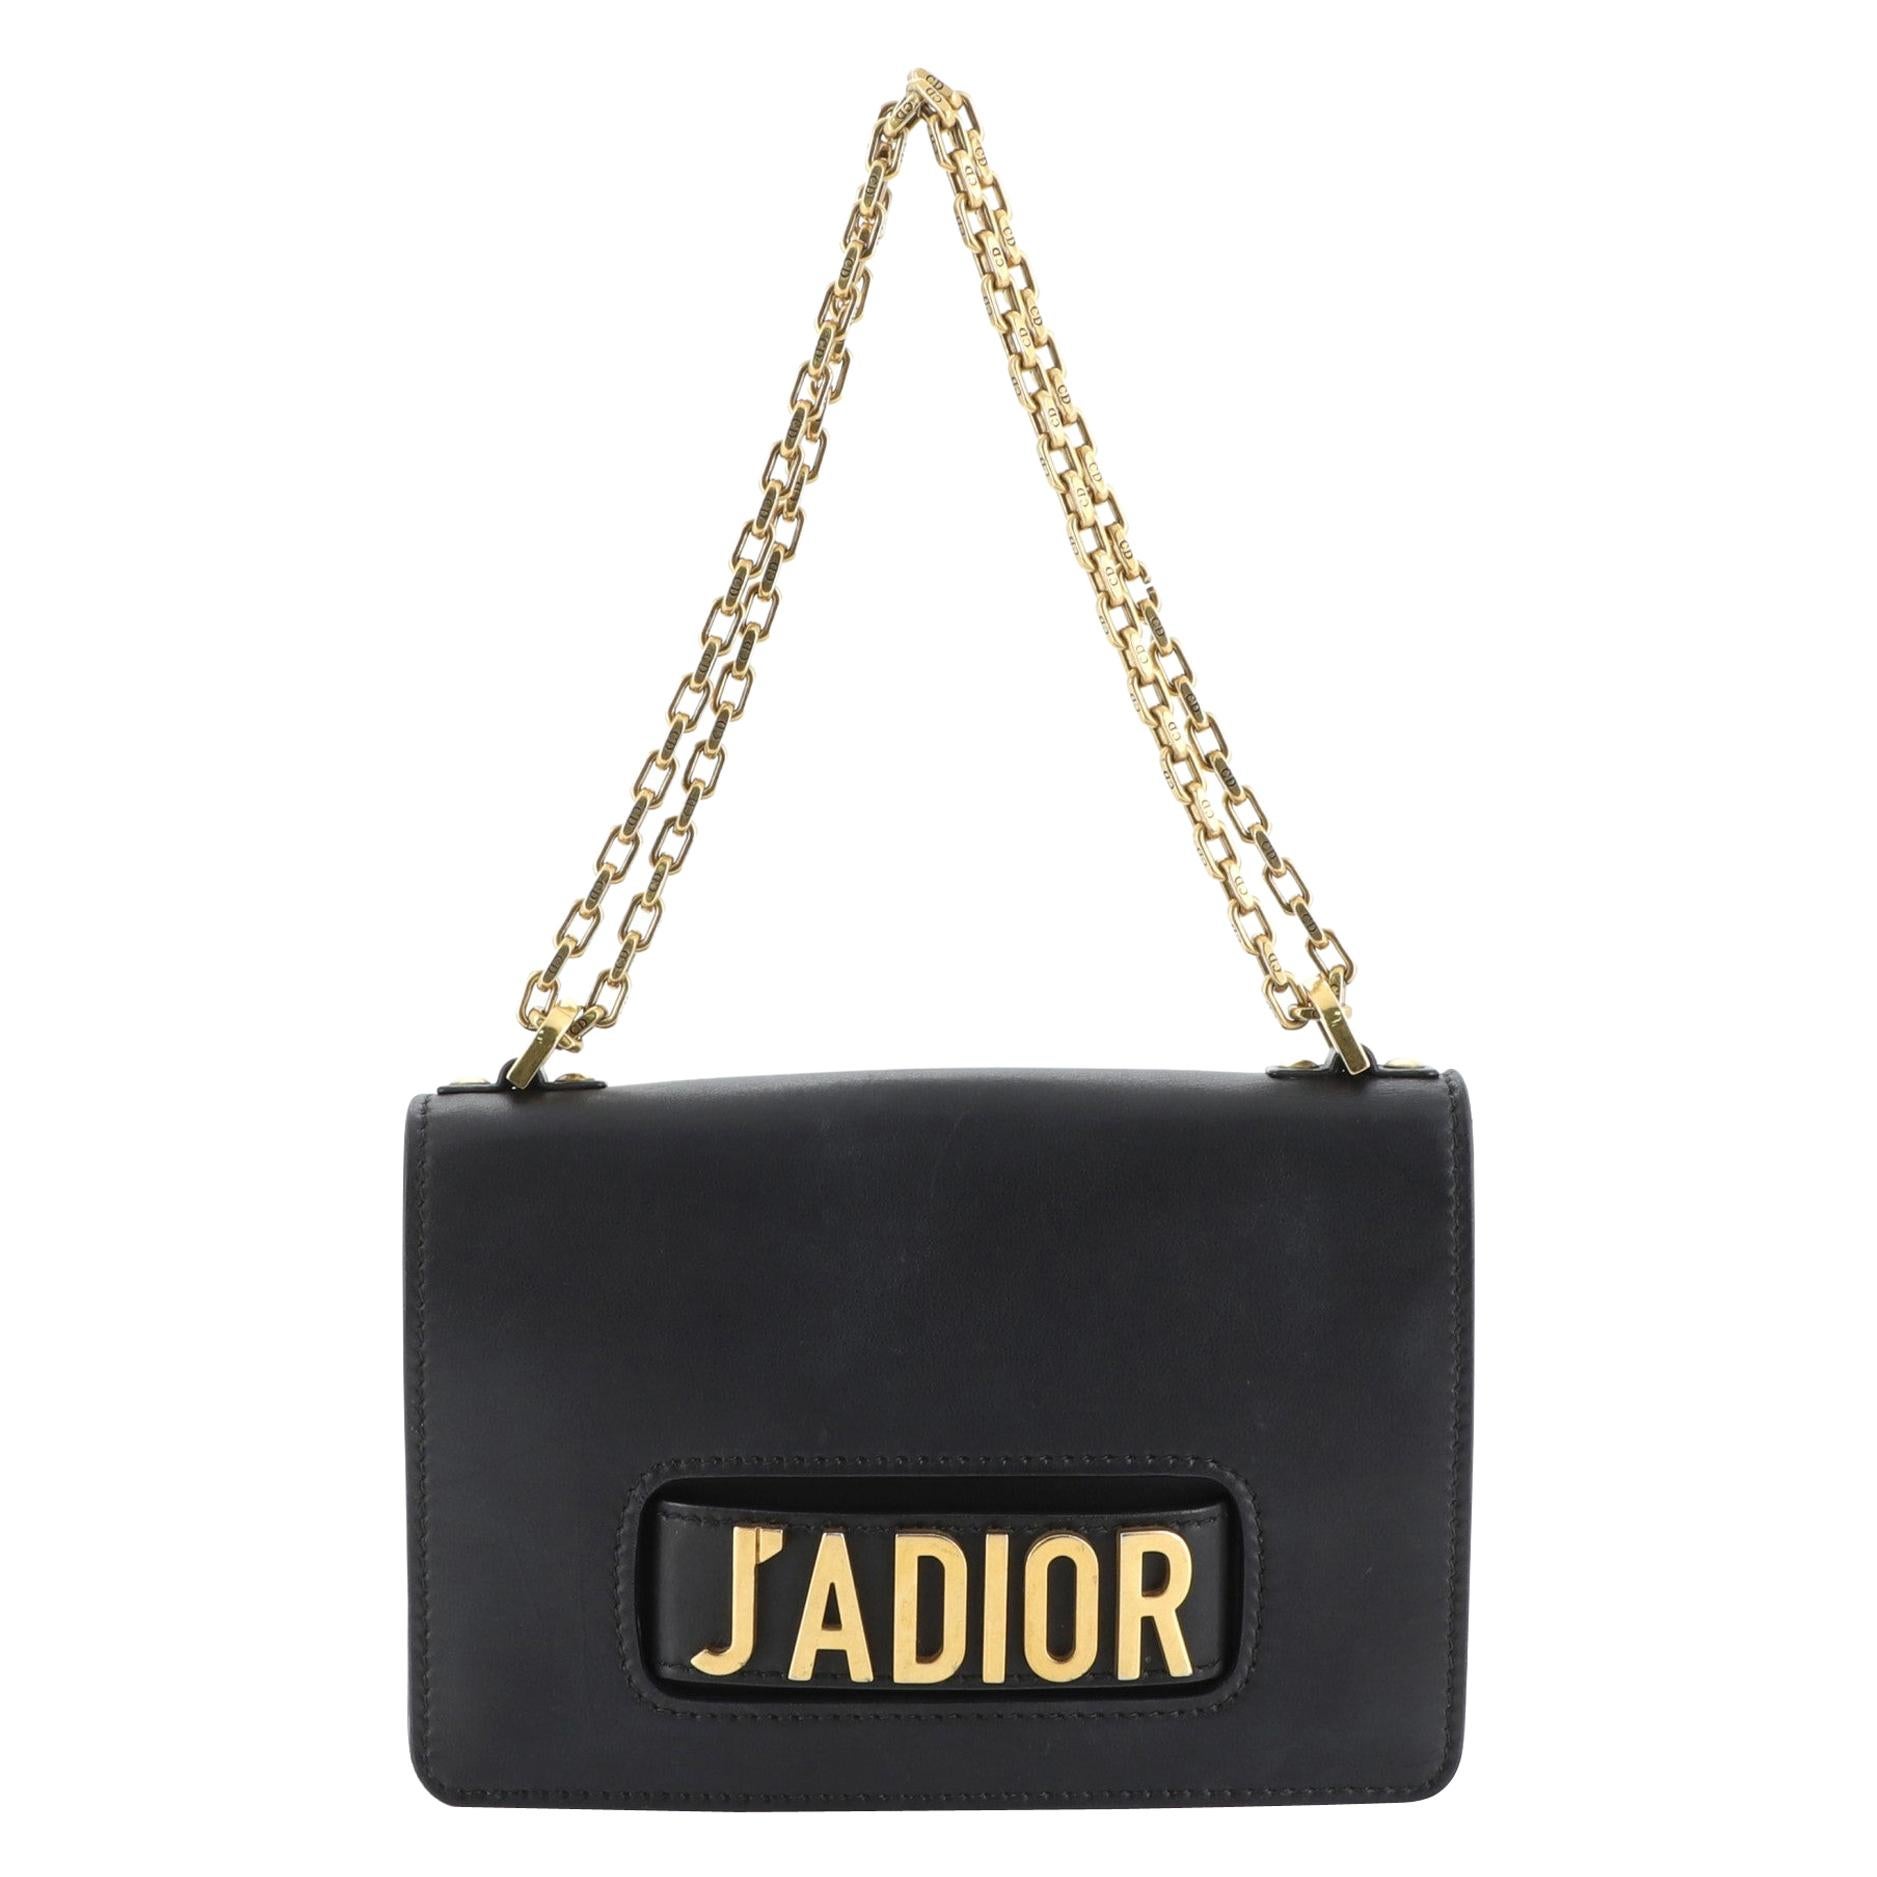 Christian Dior J'adior Flap Bag Calfskin Medium 